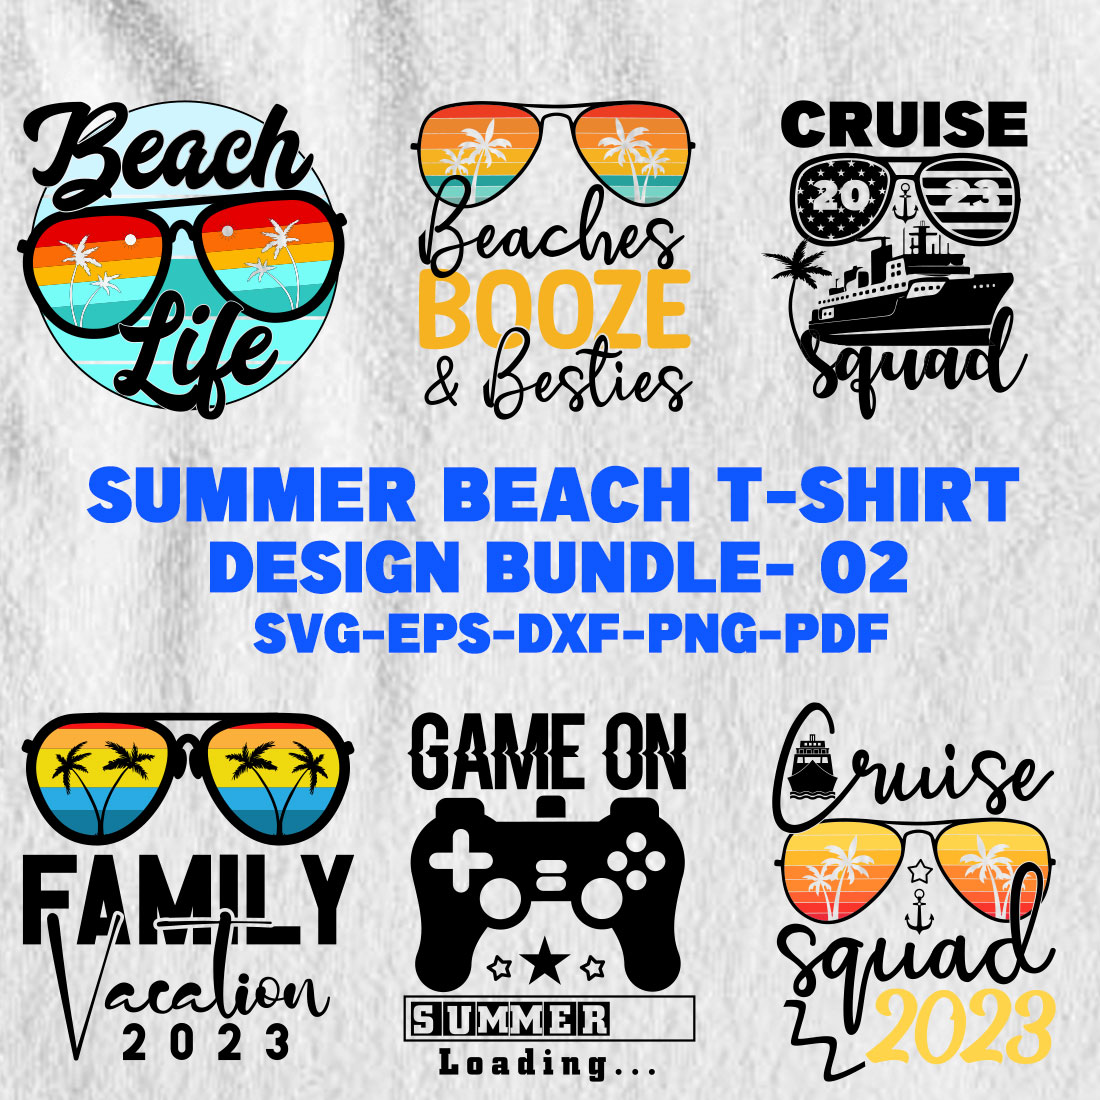 Summer Vacation T-shirt Design Bundle- 02 cover image.